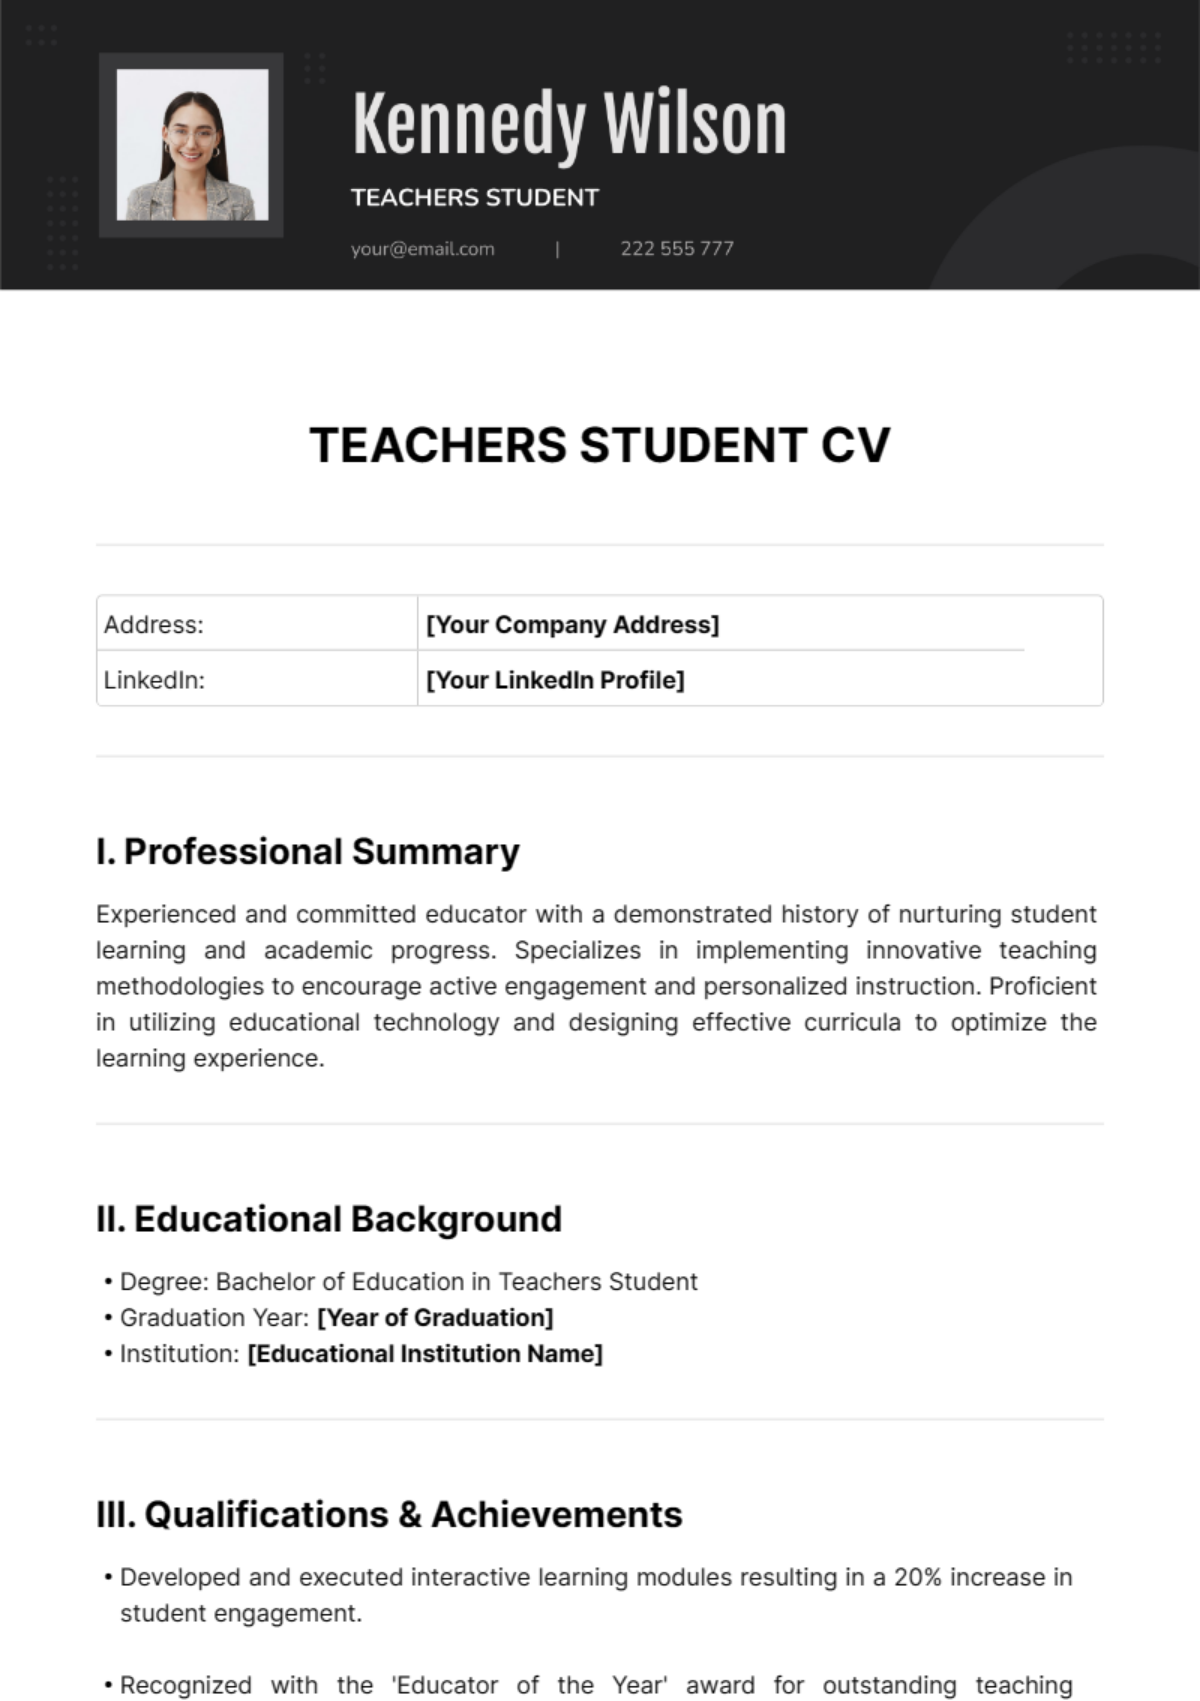 Free Teachers Student CV Template